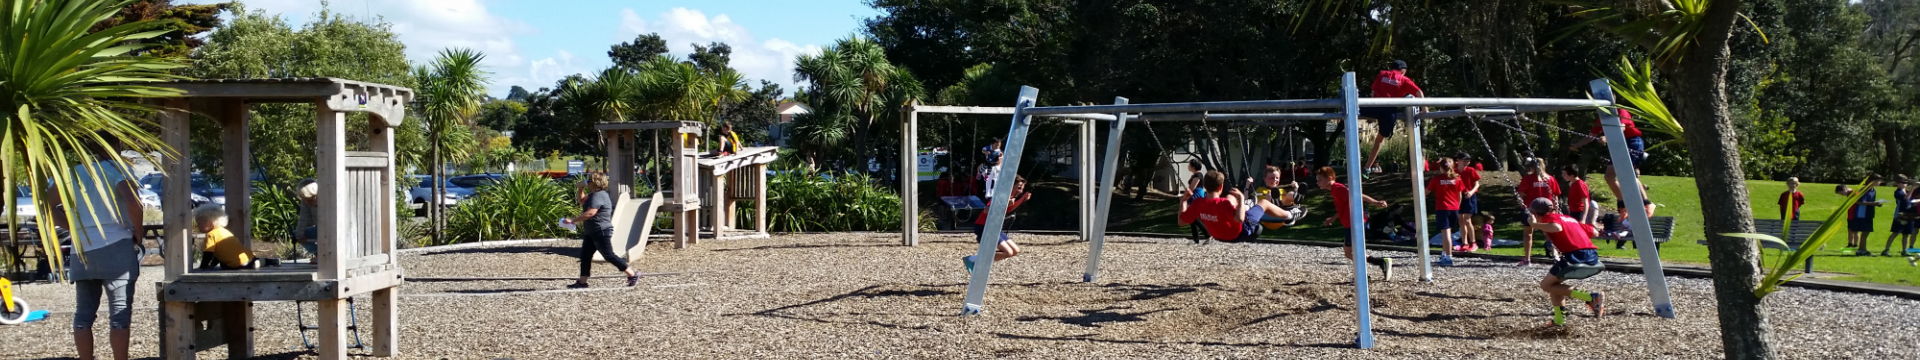 Small sliders playgrounds.3